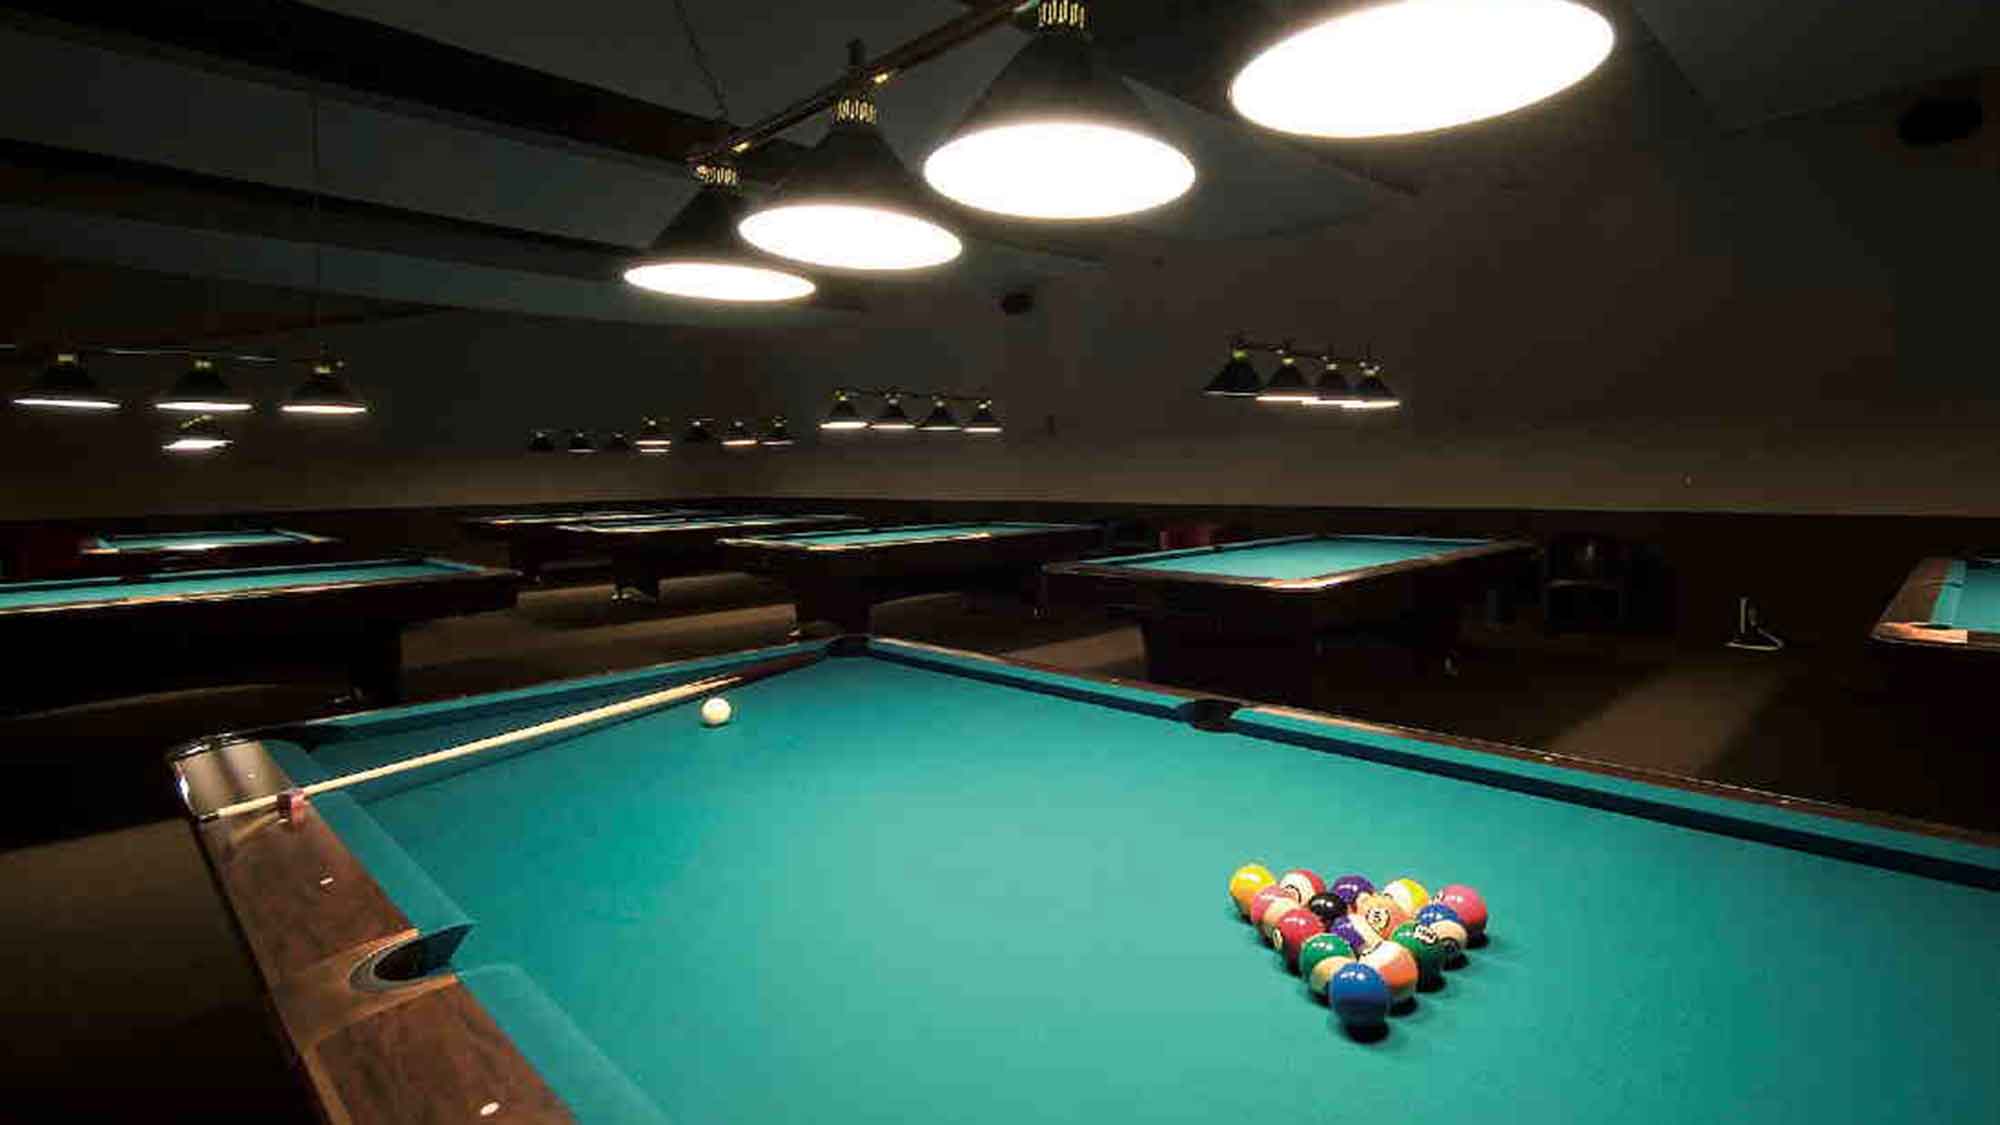 Anzeige: United Pool, Snooker, Darts und Lounge in Gütersloh